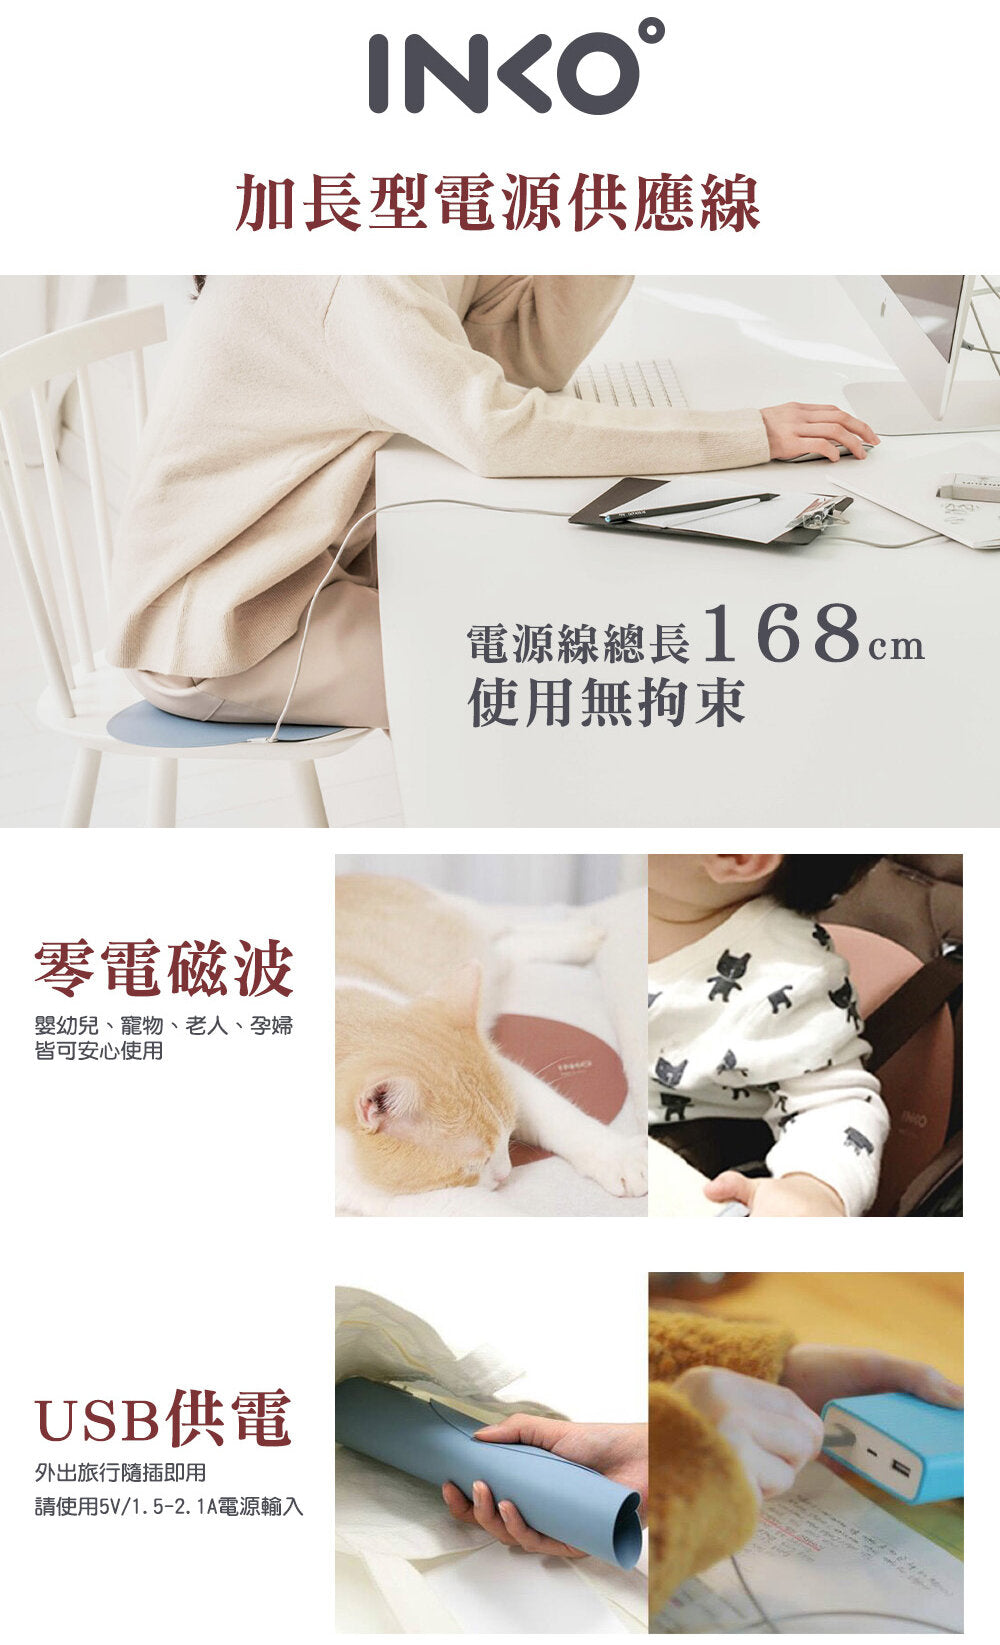 Inko - Smart Heating Mat HEAL 超薄保暖墊 (光滑TPU) PD-270